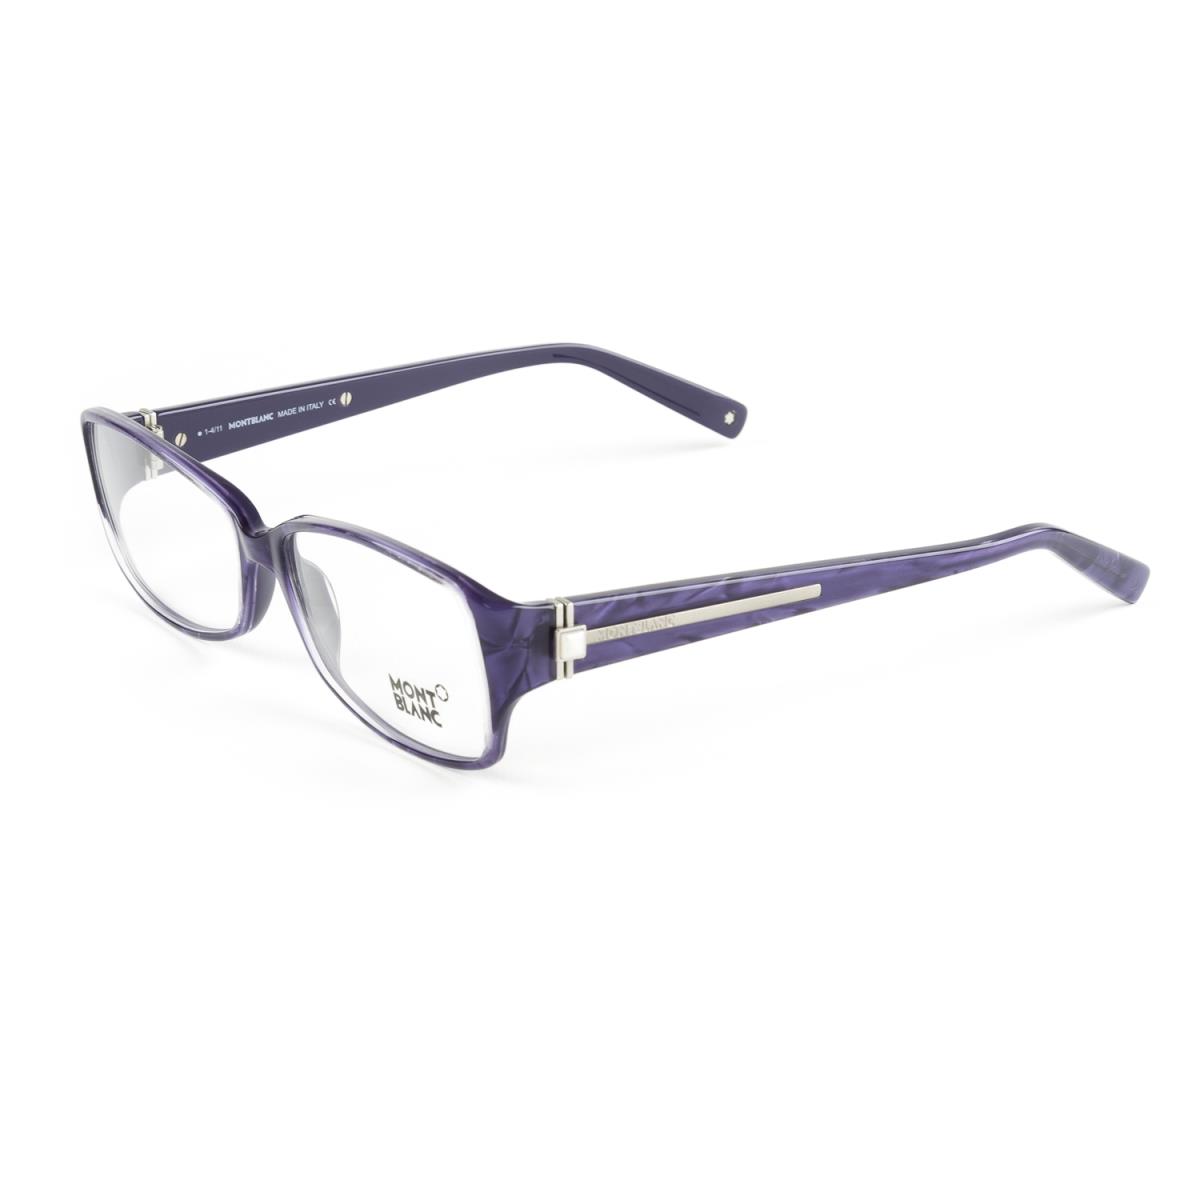 Montblanc Rectangular Eyeglass Frames 56mm MB380 081 - Shiny Violet